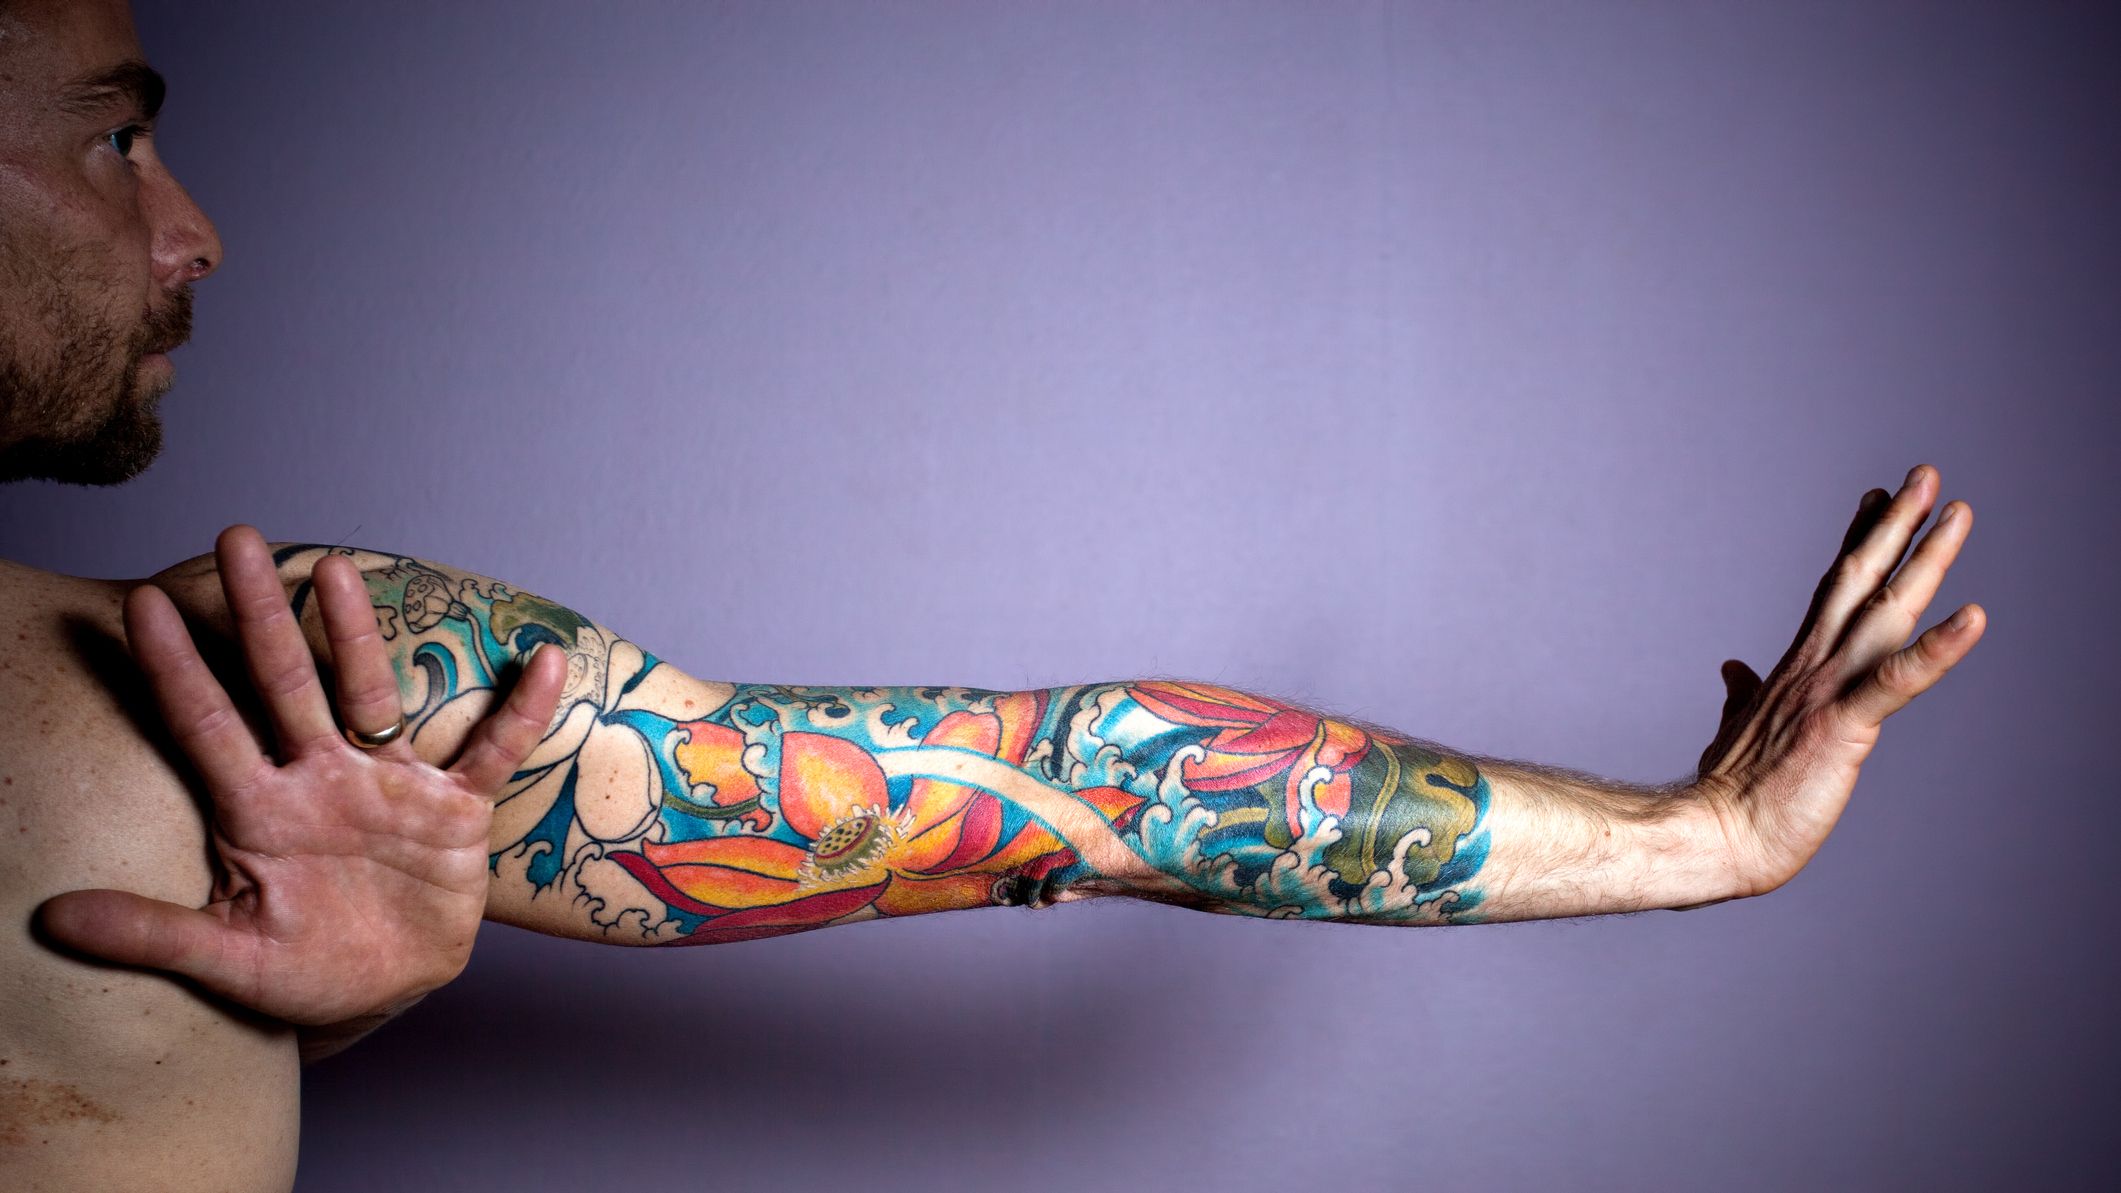 tattoos ideas for men on ribs